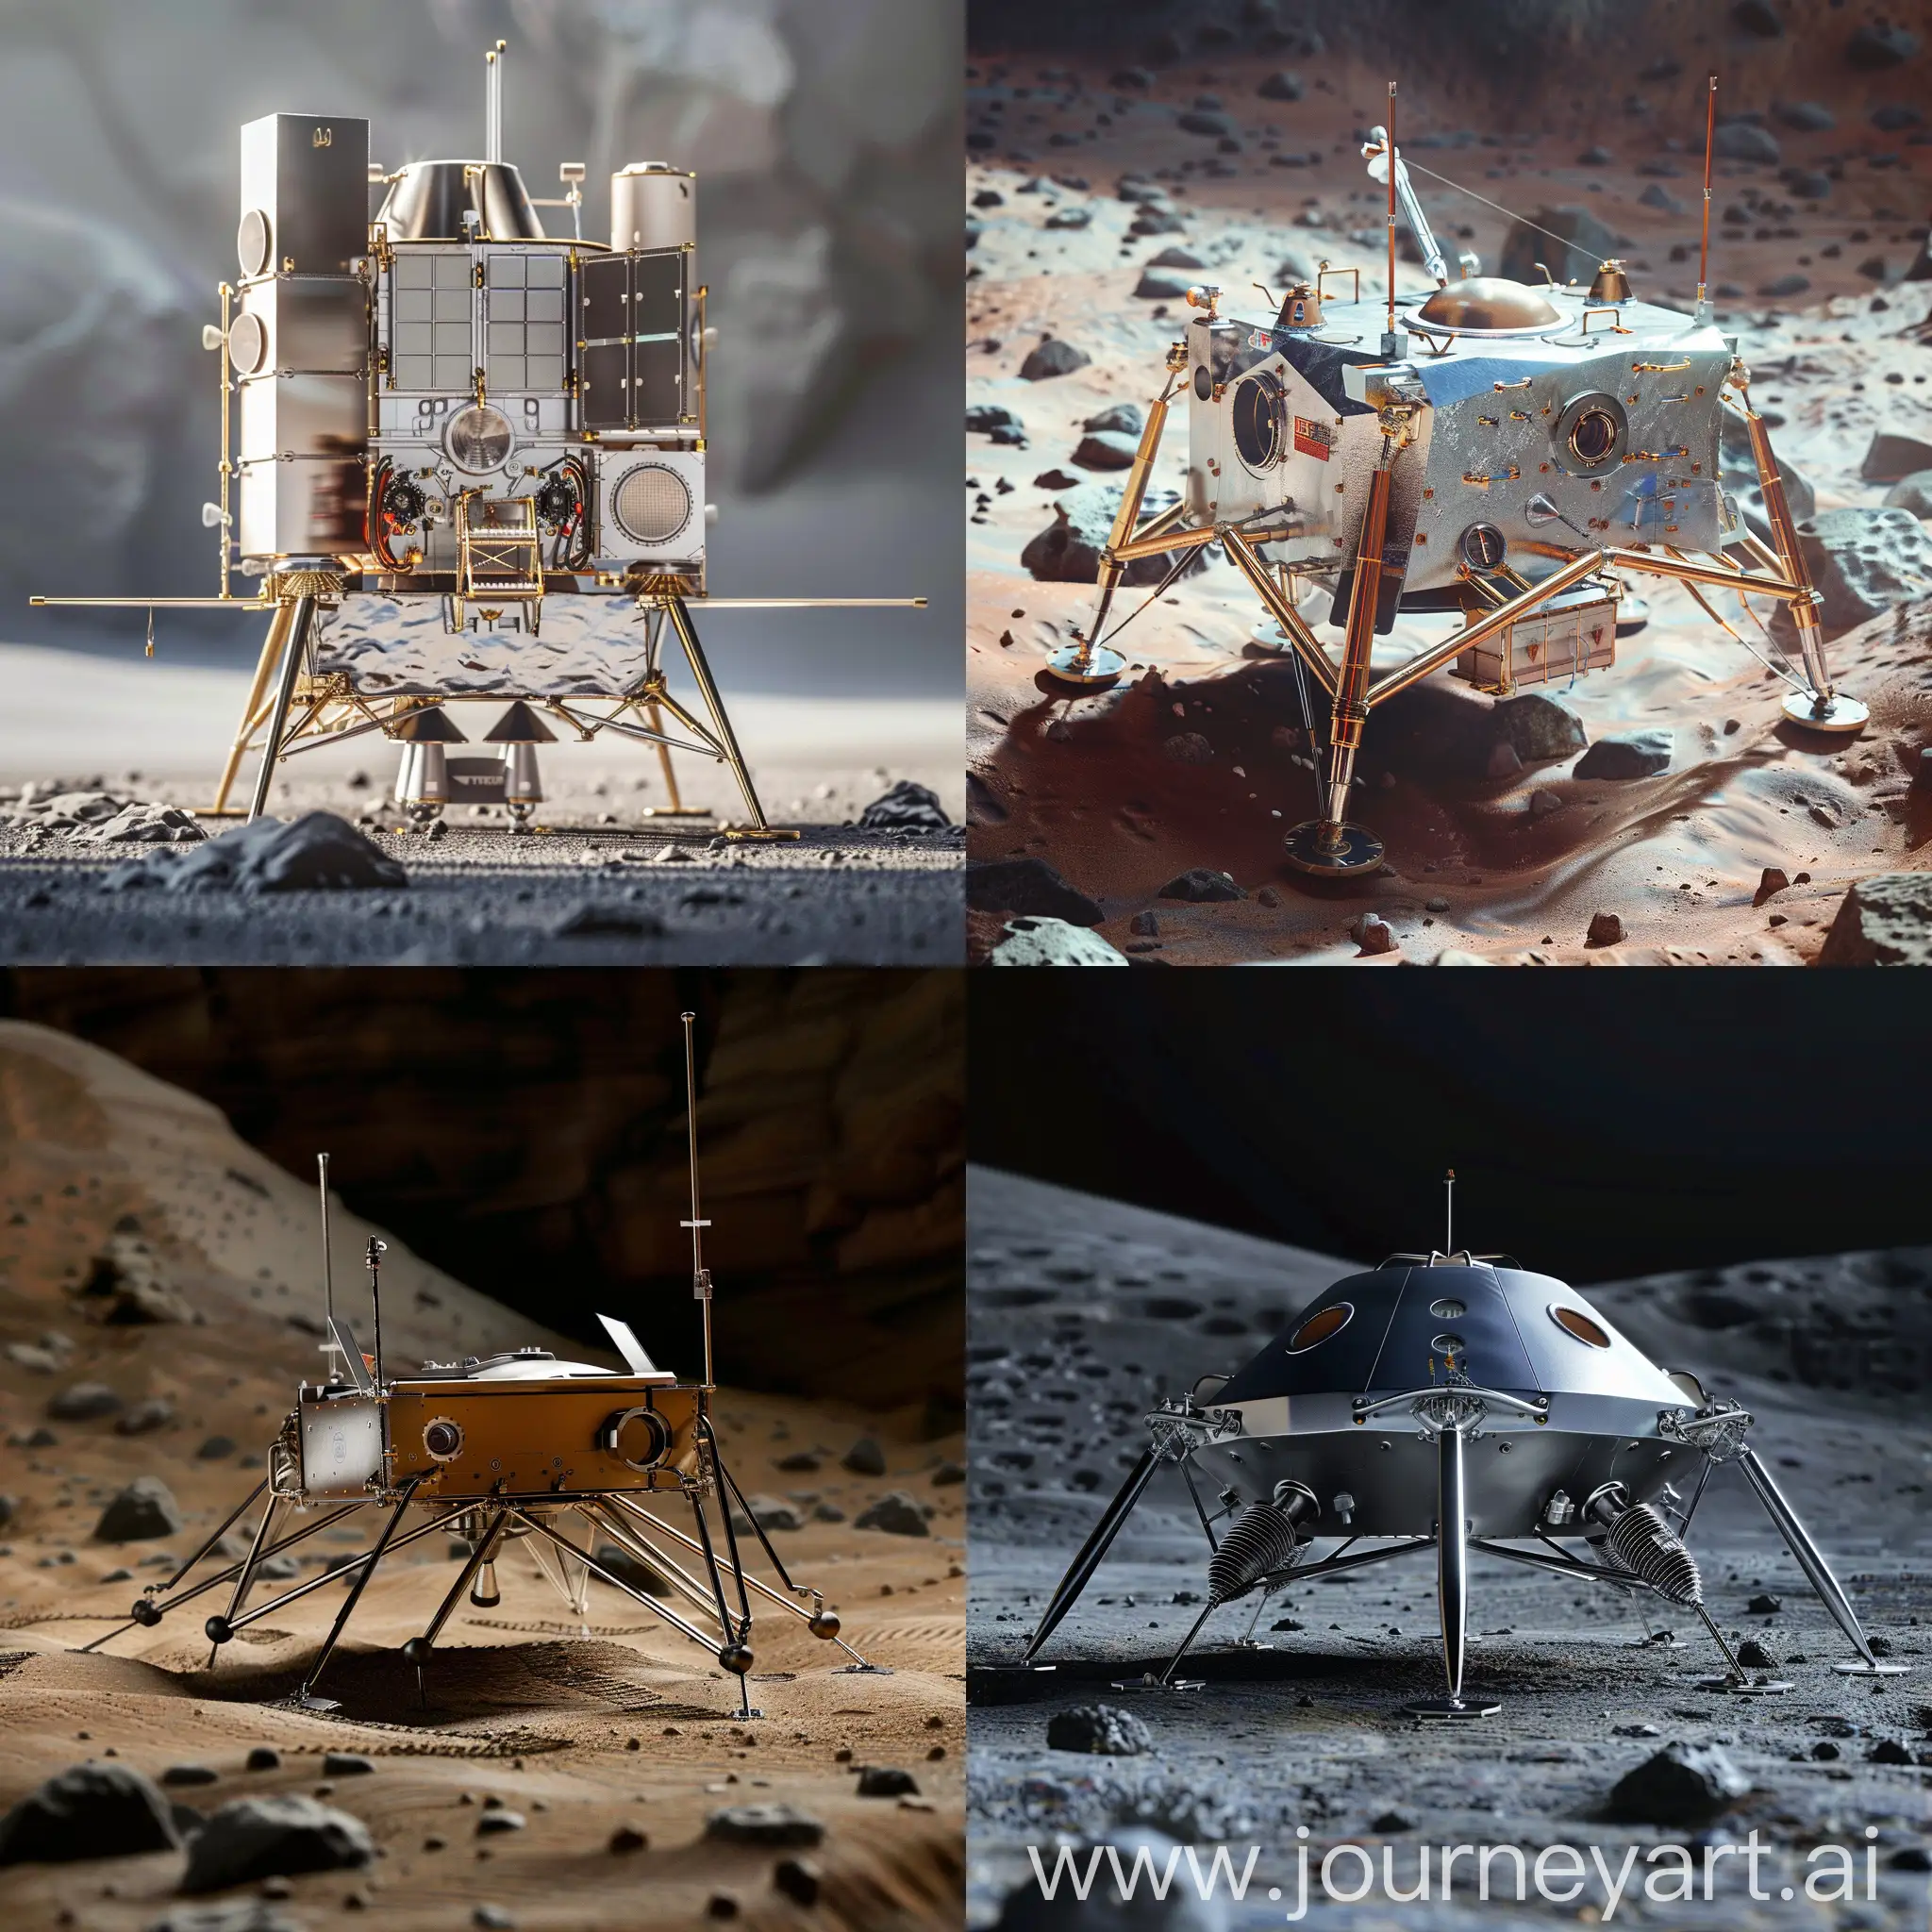 Lander-Spacecraft-with-Aluminum-Body-on-Lunar-Surface